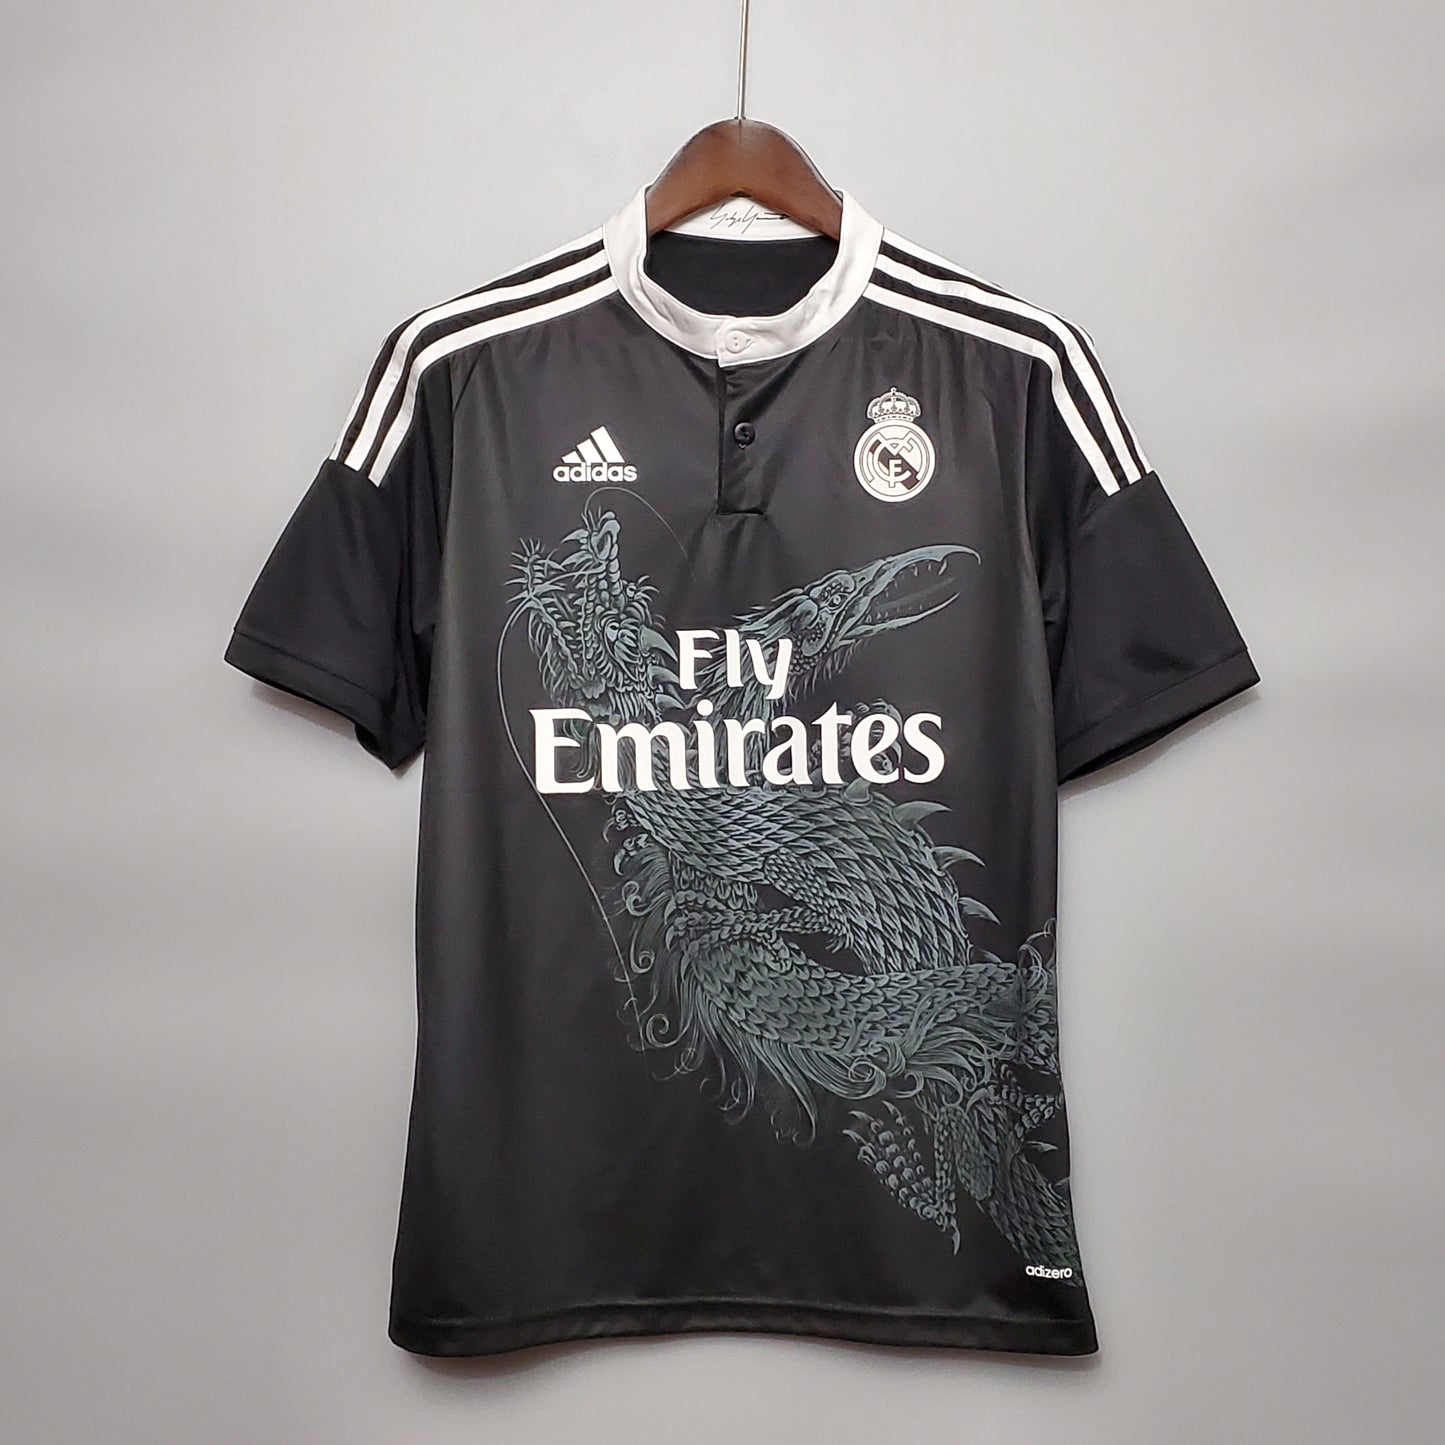 Retro Real Madrid 2014/15 Black Third Kit Kroos 8